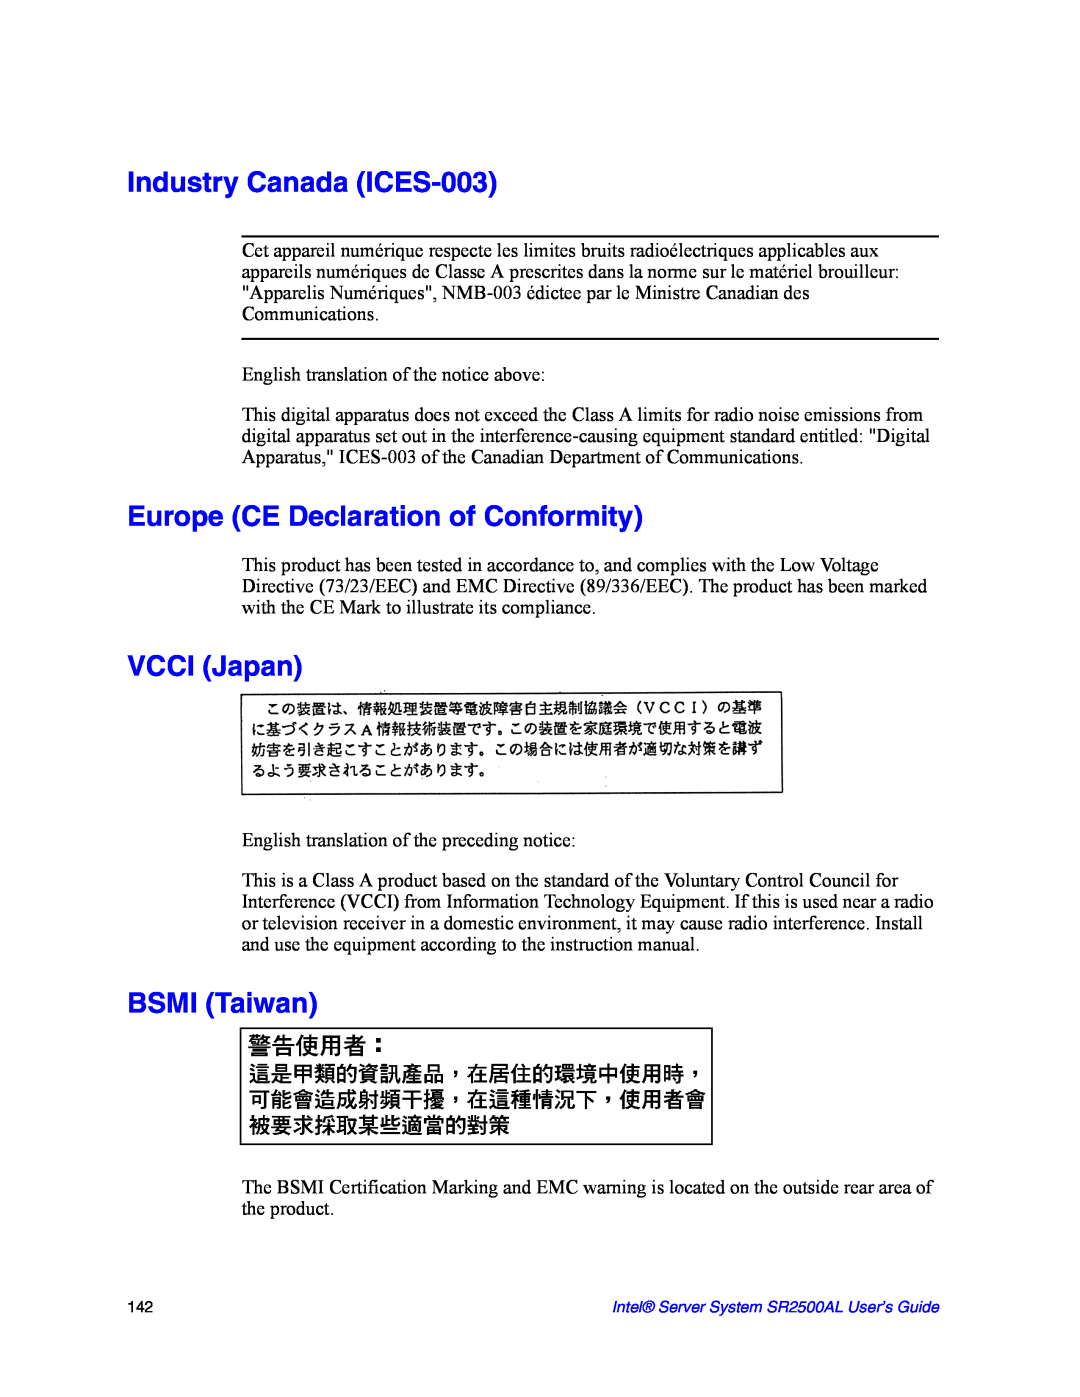 Intel SR2500AL manual Industry Canada ICES-003, Europe CE Declaration of Conformity, VCCI Japan, BSMI Taiwan 